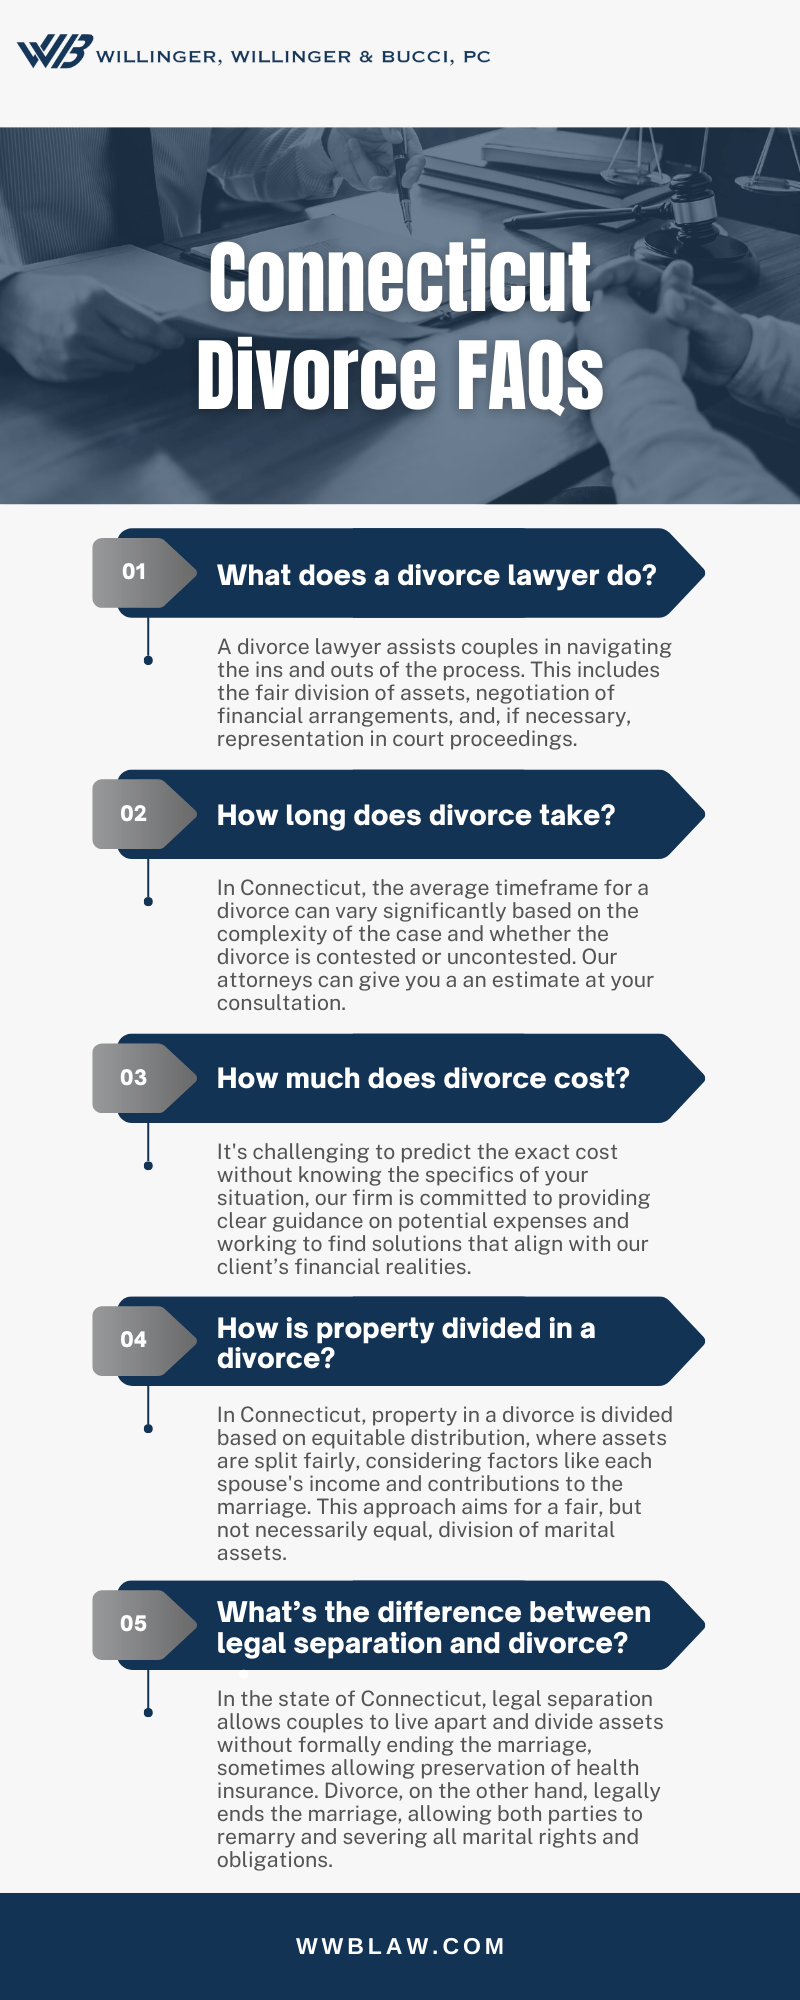 Connecticut Divorce FAQs Infographic